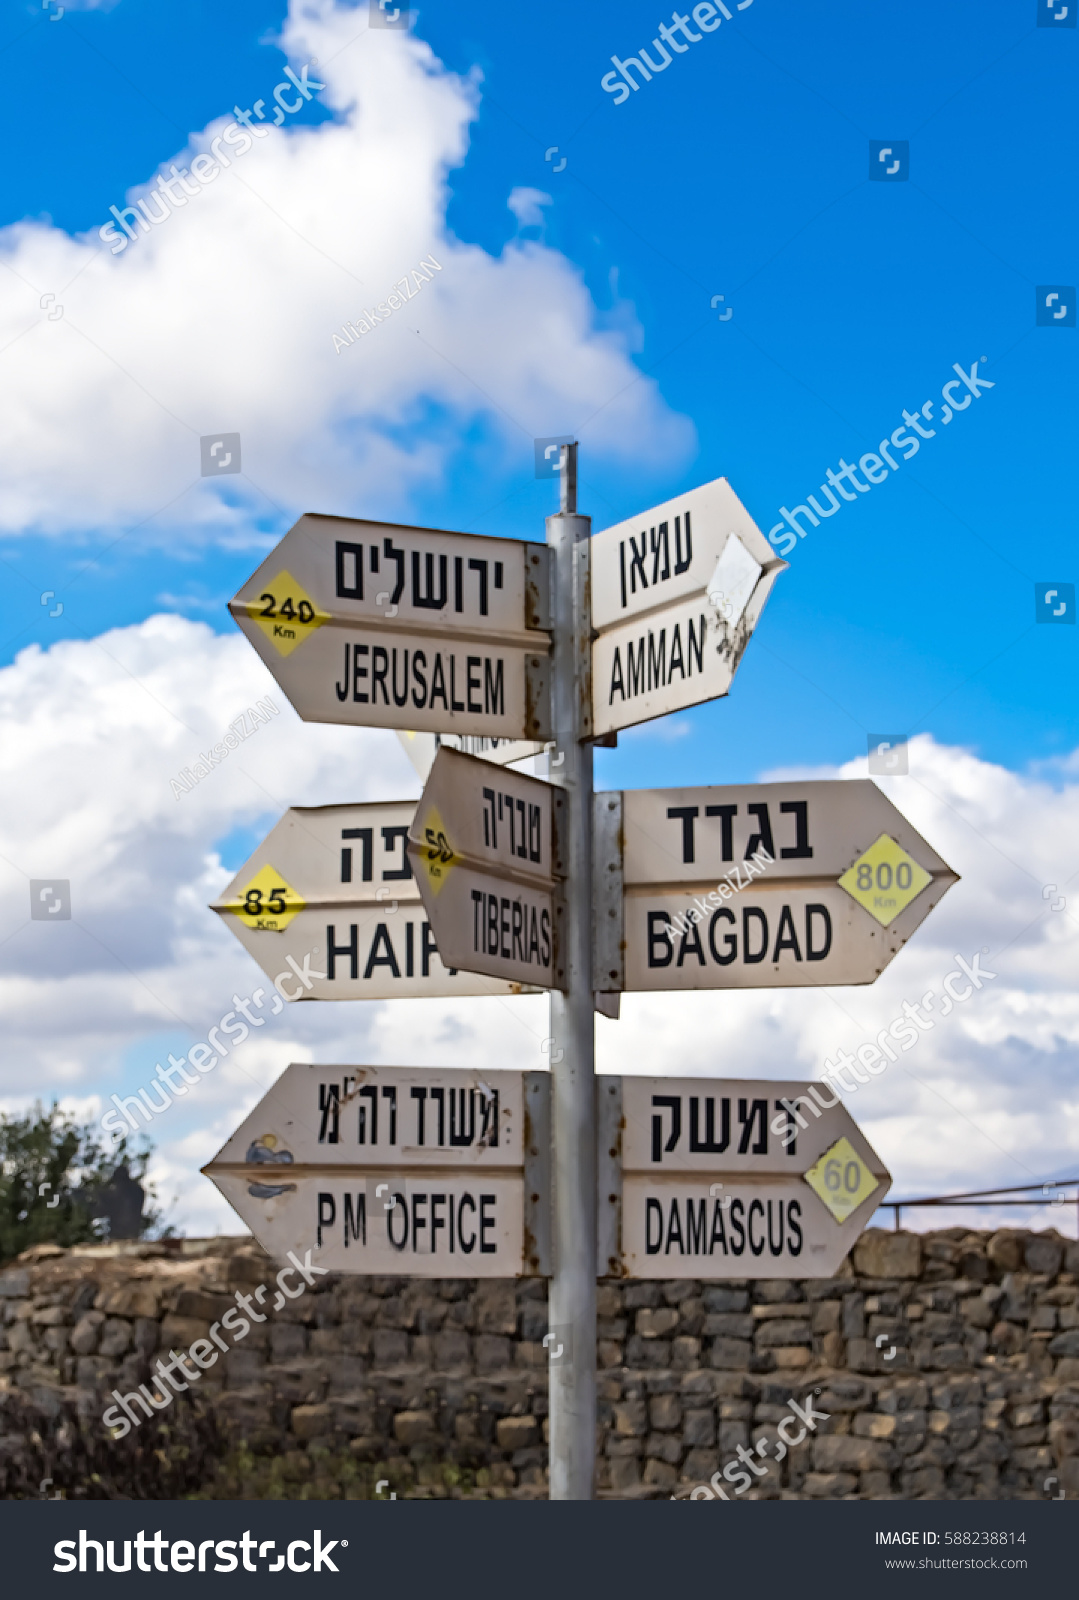 Index distances, Israel. Bagdat, Damascus, Amman, Jerusalem, Tiberias, Yfifa.The metaphor of the wall pointer. #588238814